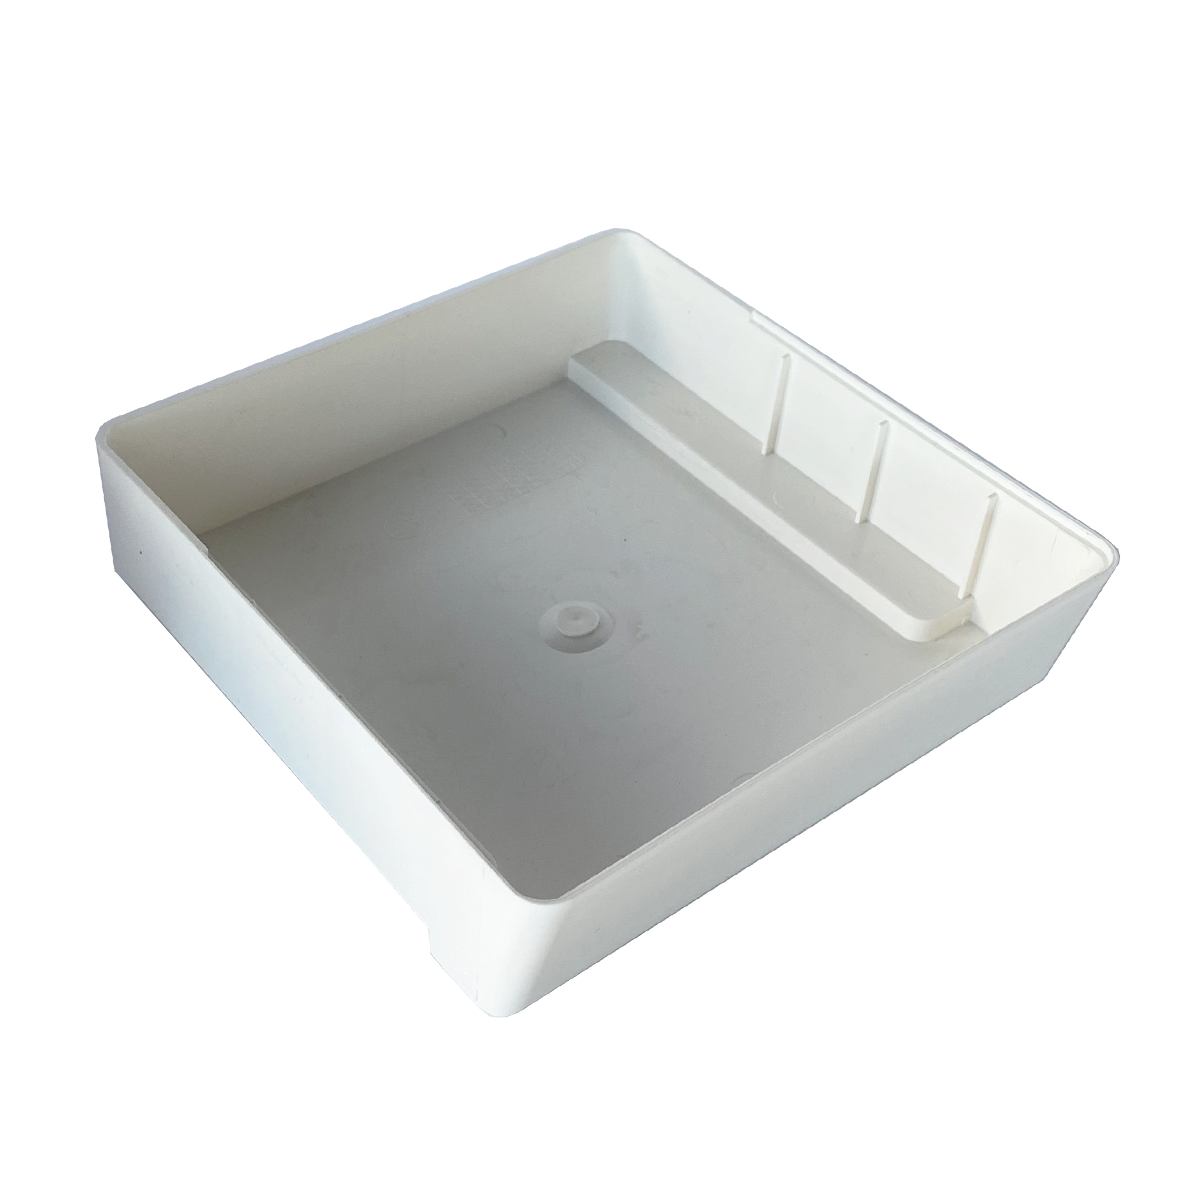 White plastic tray